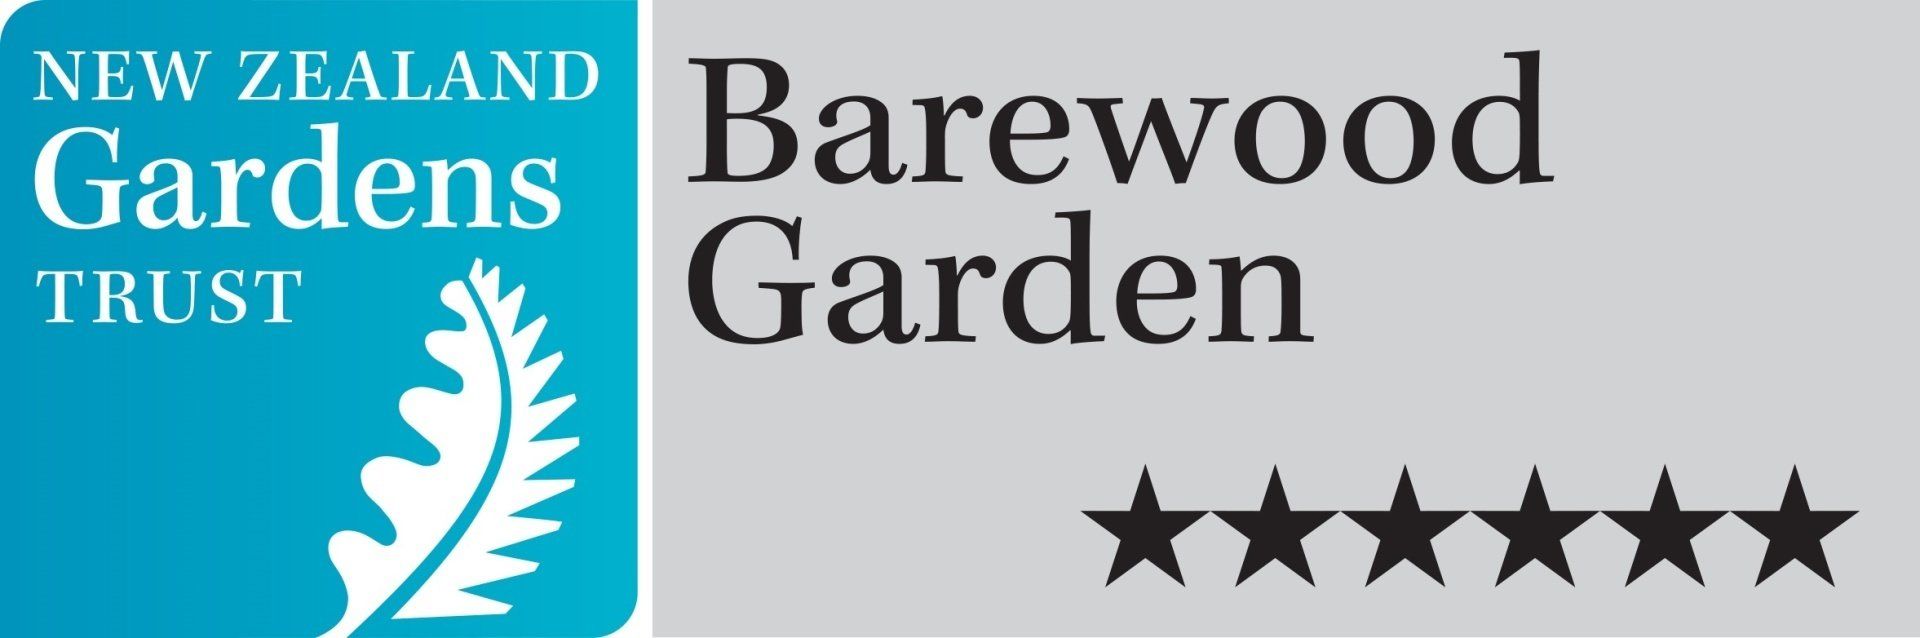 Barewood Garden - New Zealand Garden Trust Member